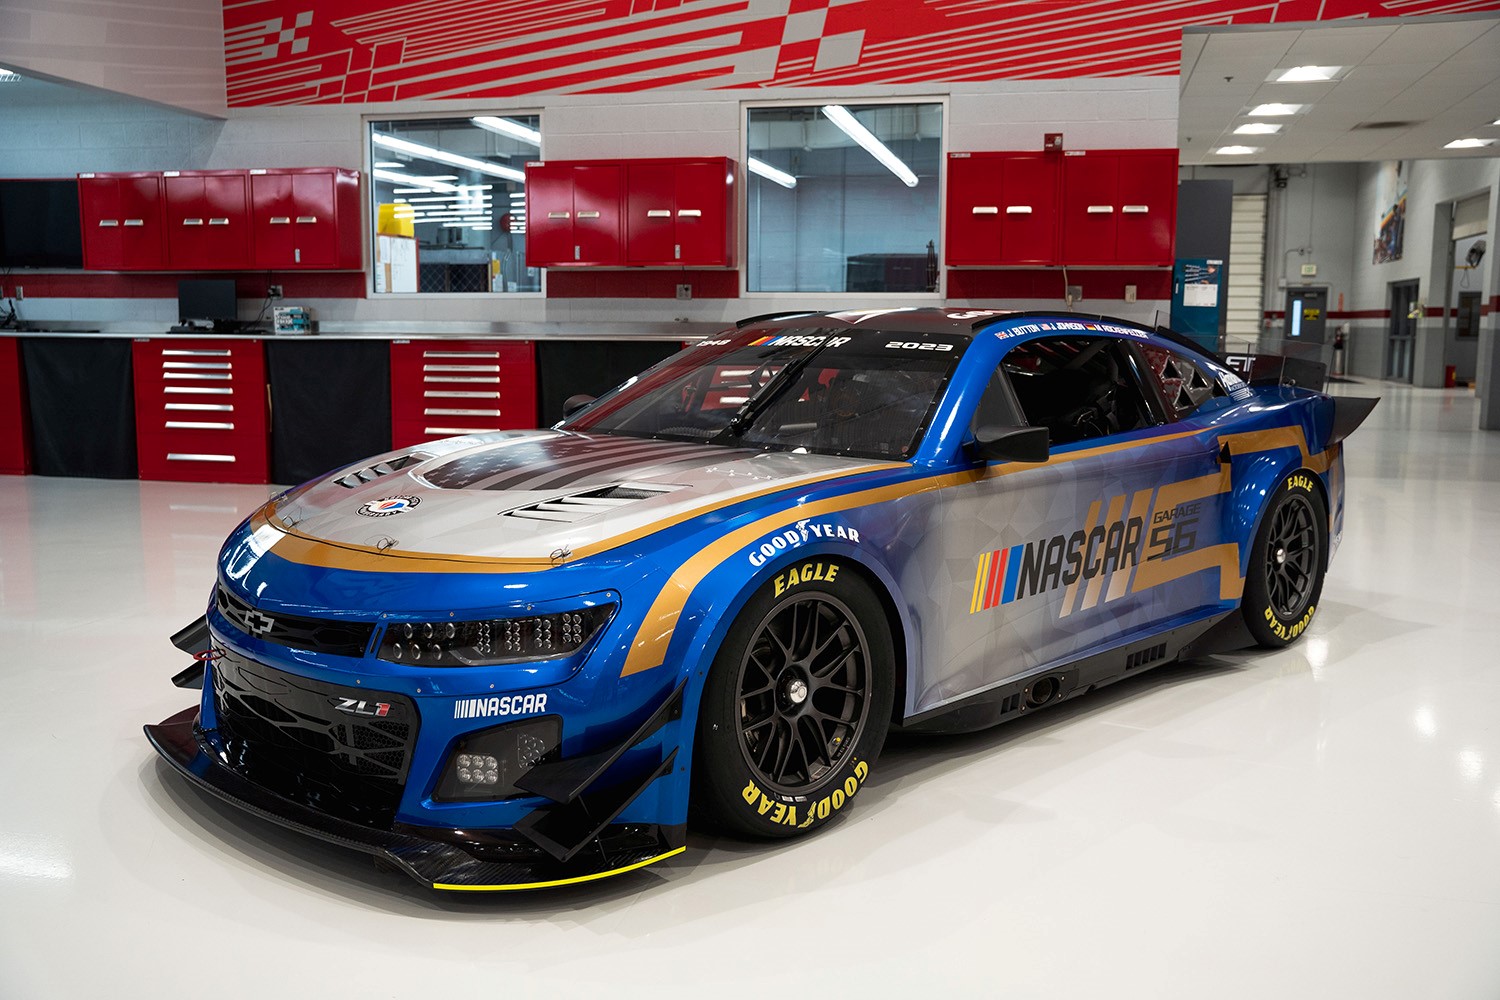 NASCAR Le Mans Garage 56 Camaro Livery Unveiled